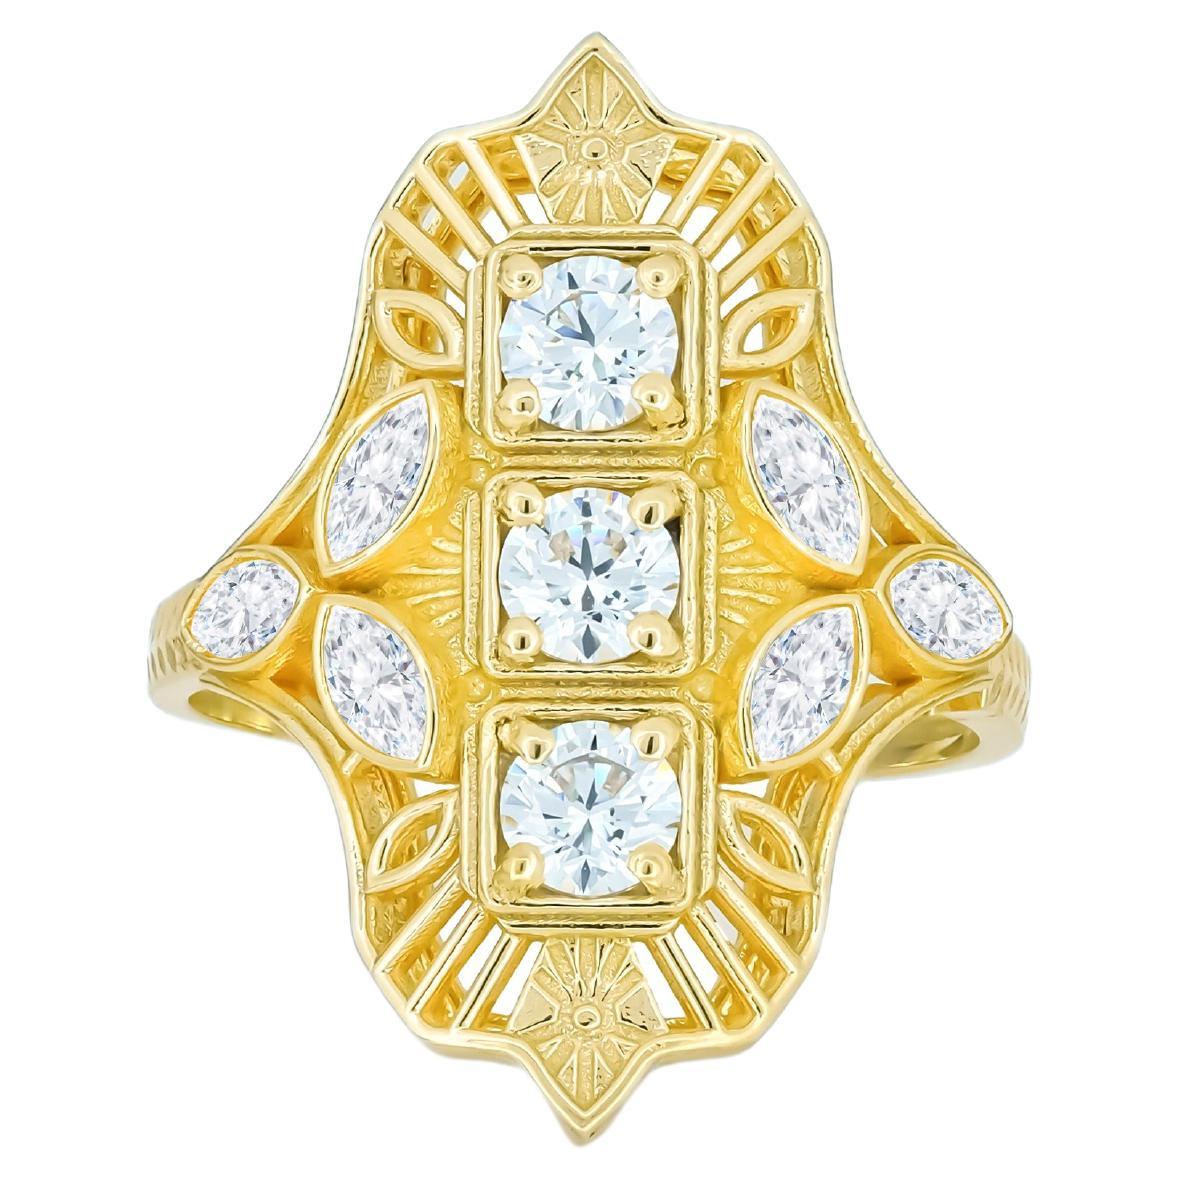 For Sale:  Vintage style moissanite 14k gold engagement ring.